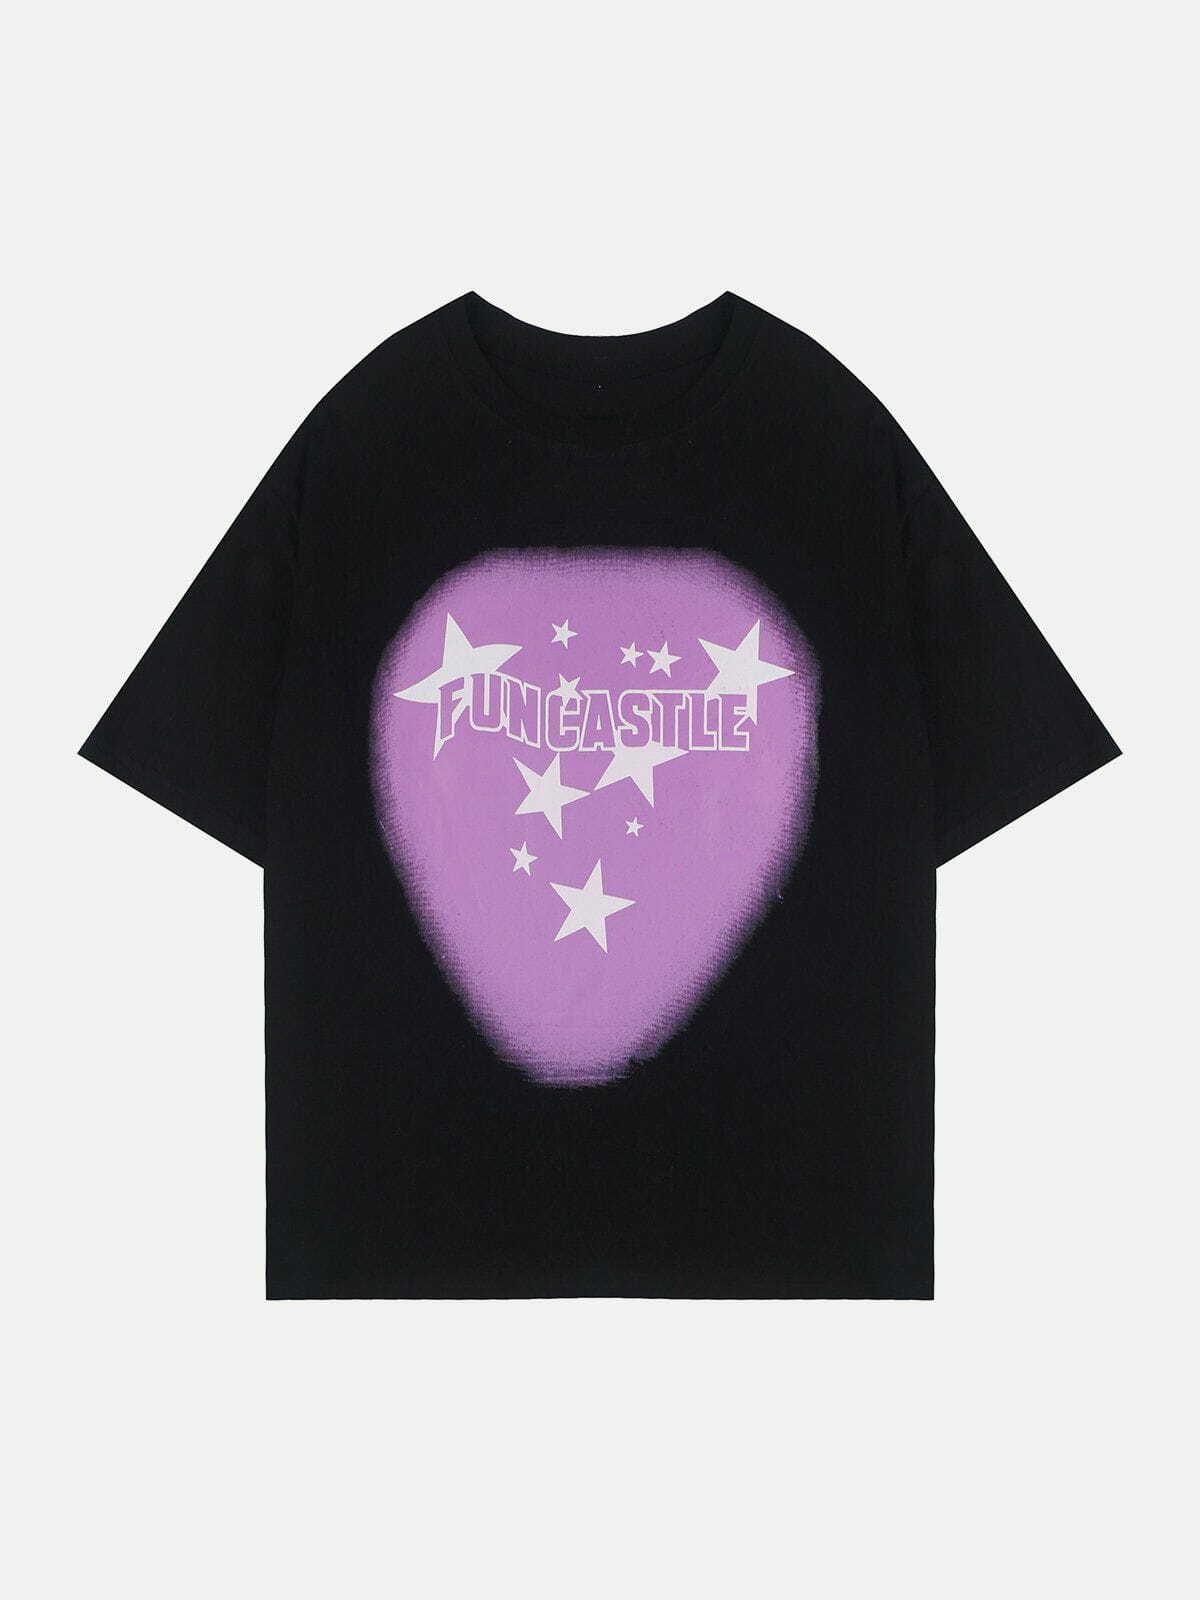 playful star print tee edgy  retro shirt for youthful streetwear 5727